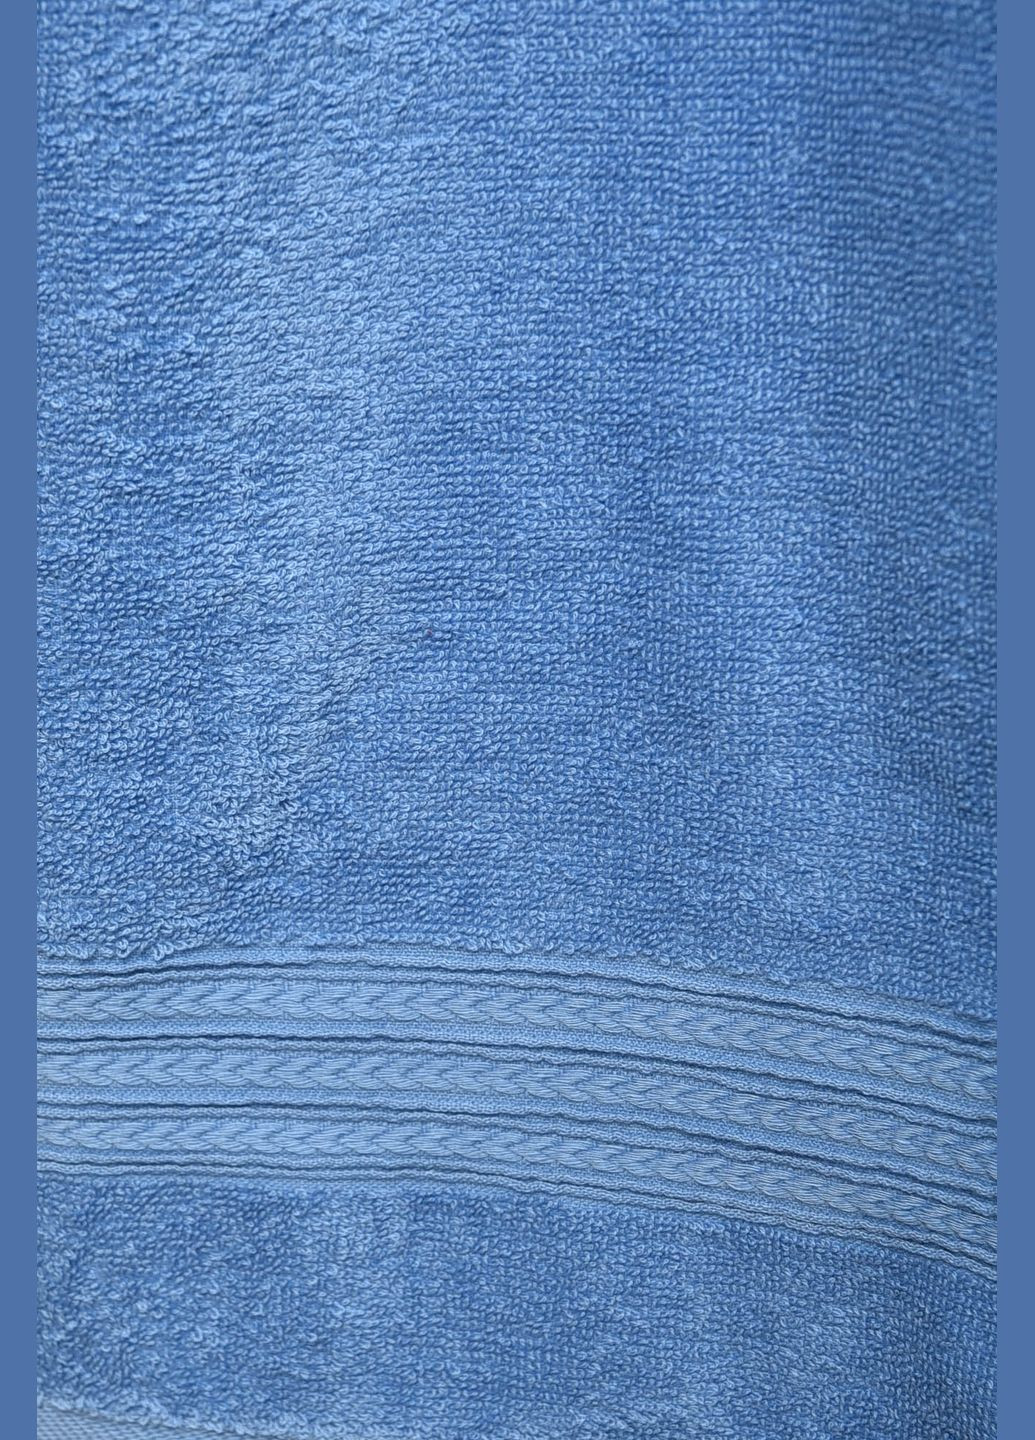 Let's Shop полотенце для лица махровое синего цвета однотонный синий производство - Узбекистан